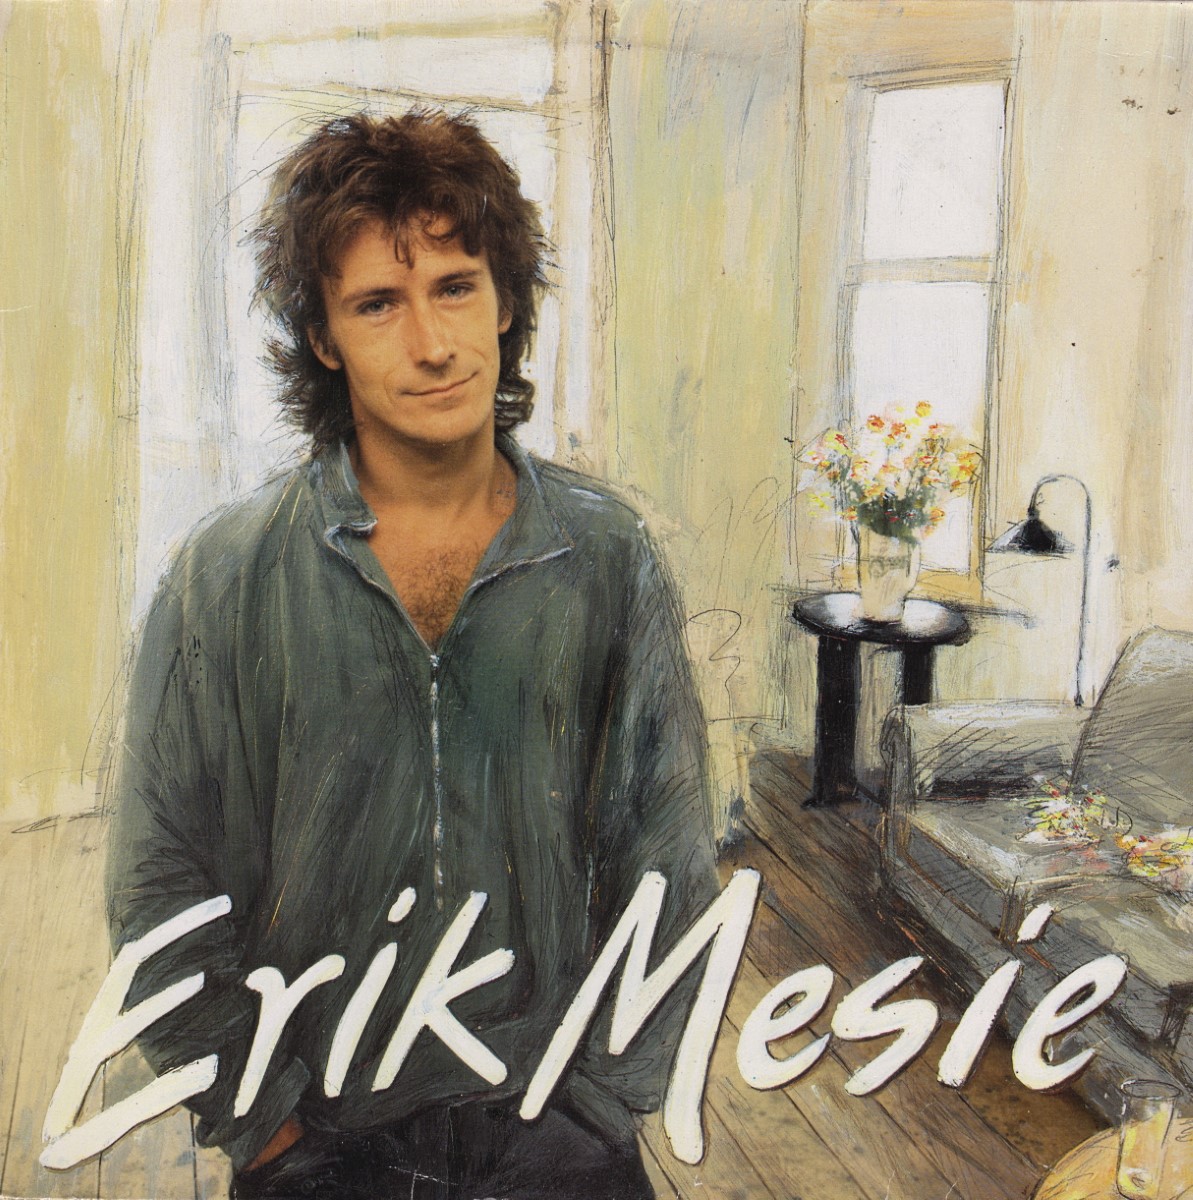 Erik Mesie - Erik Mesie (1986)